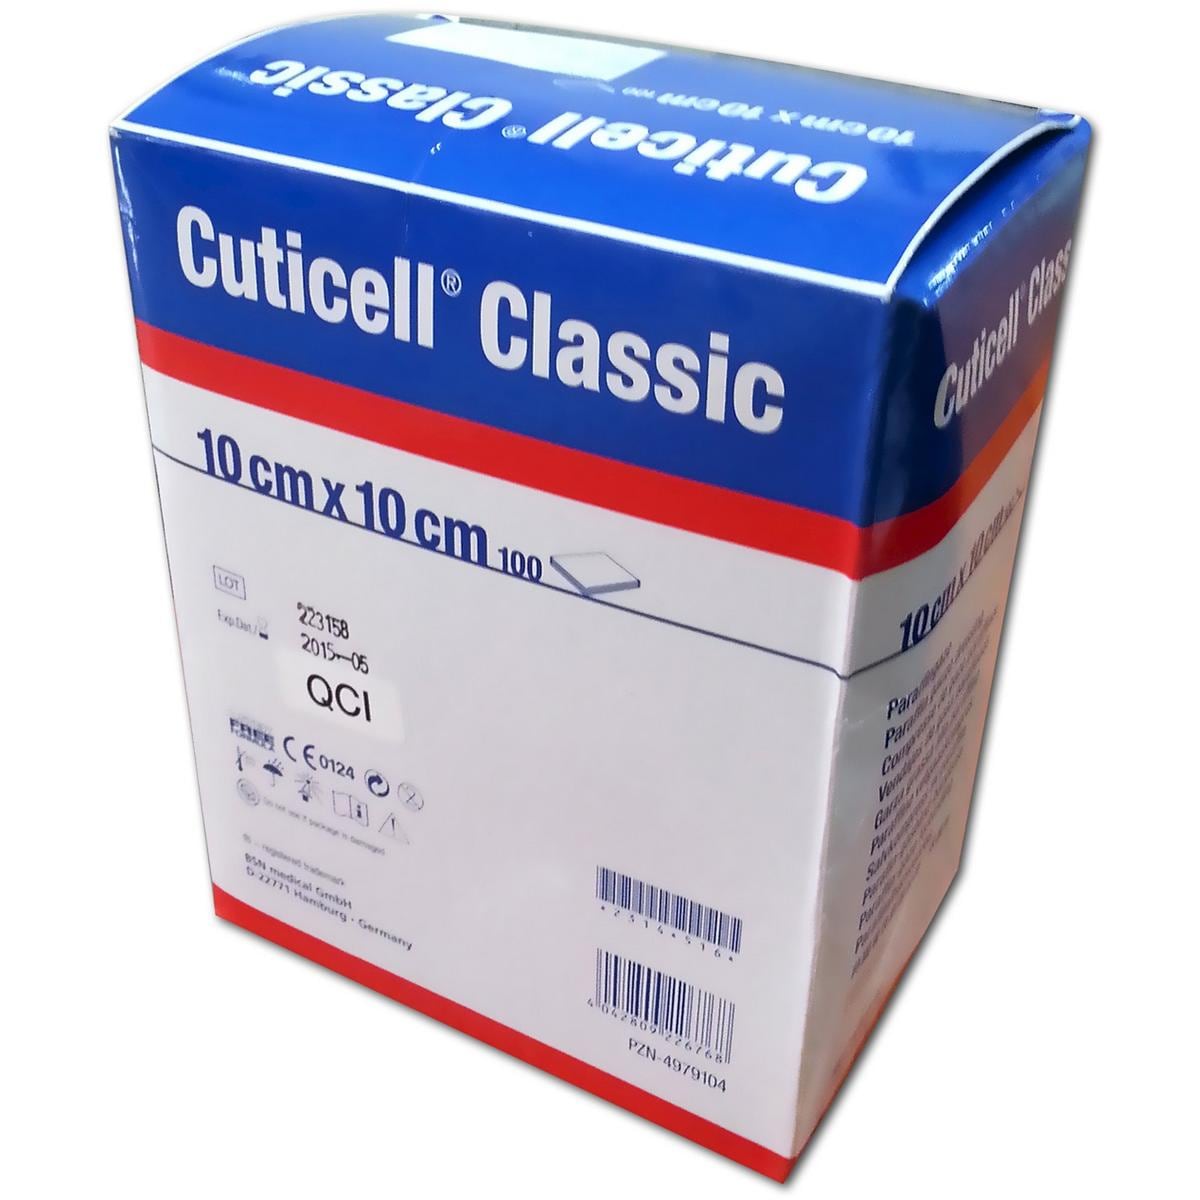 Cuticell Classic zalfkompres - 10 x 10 cm, 100 stuks